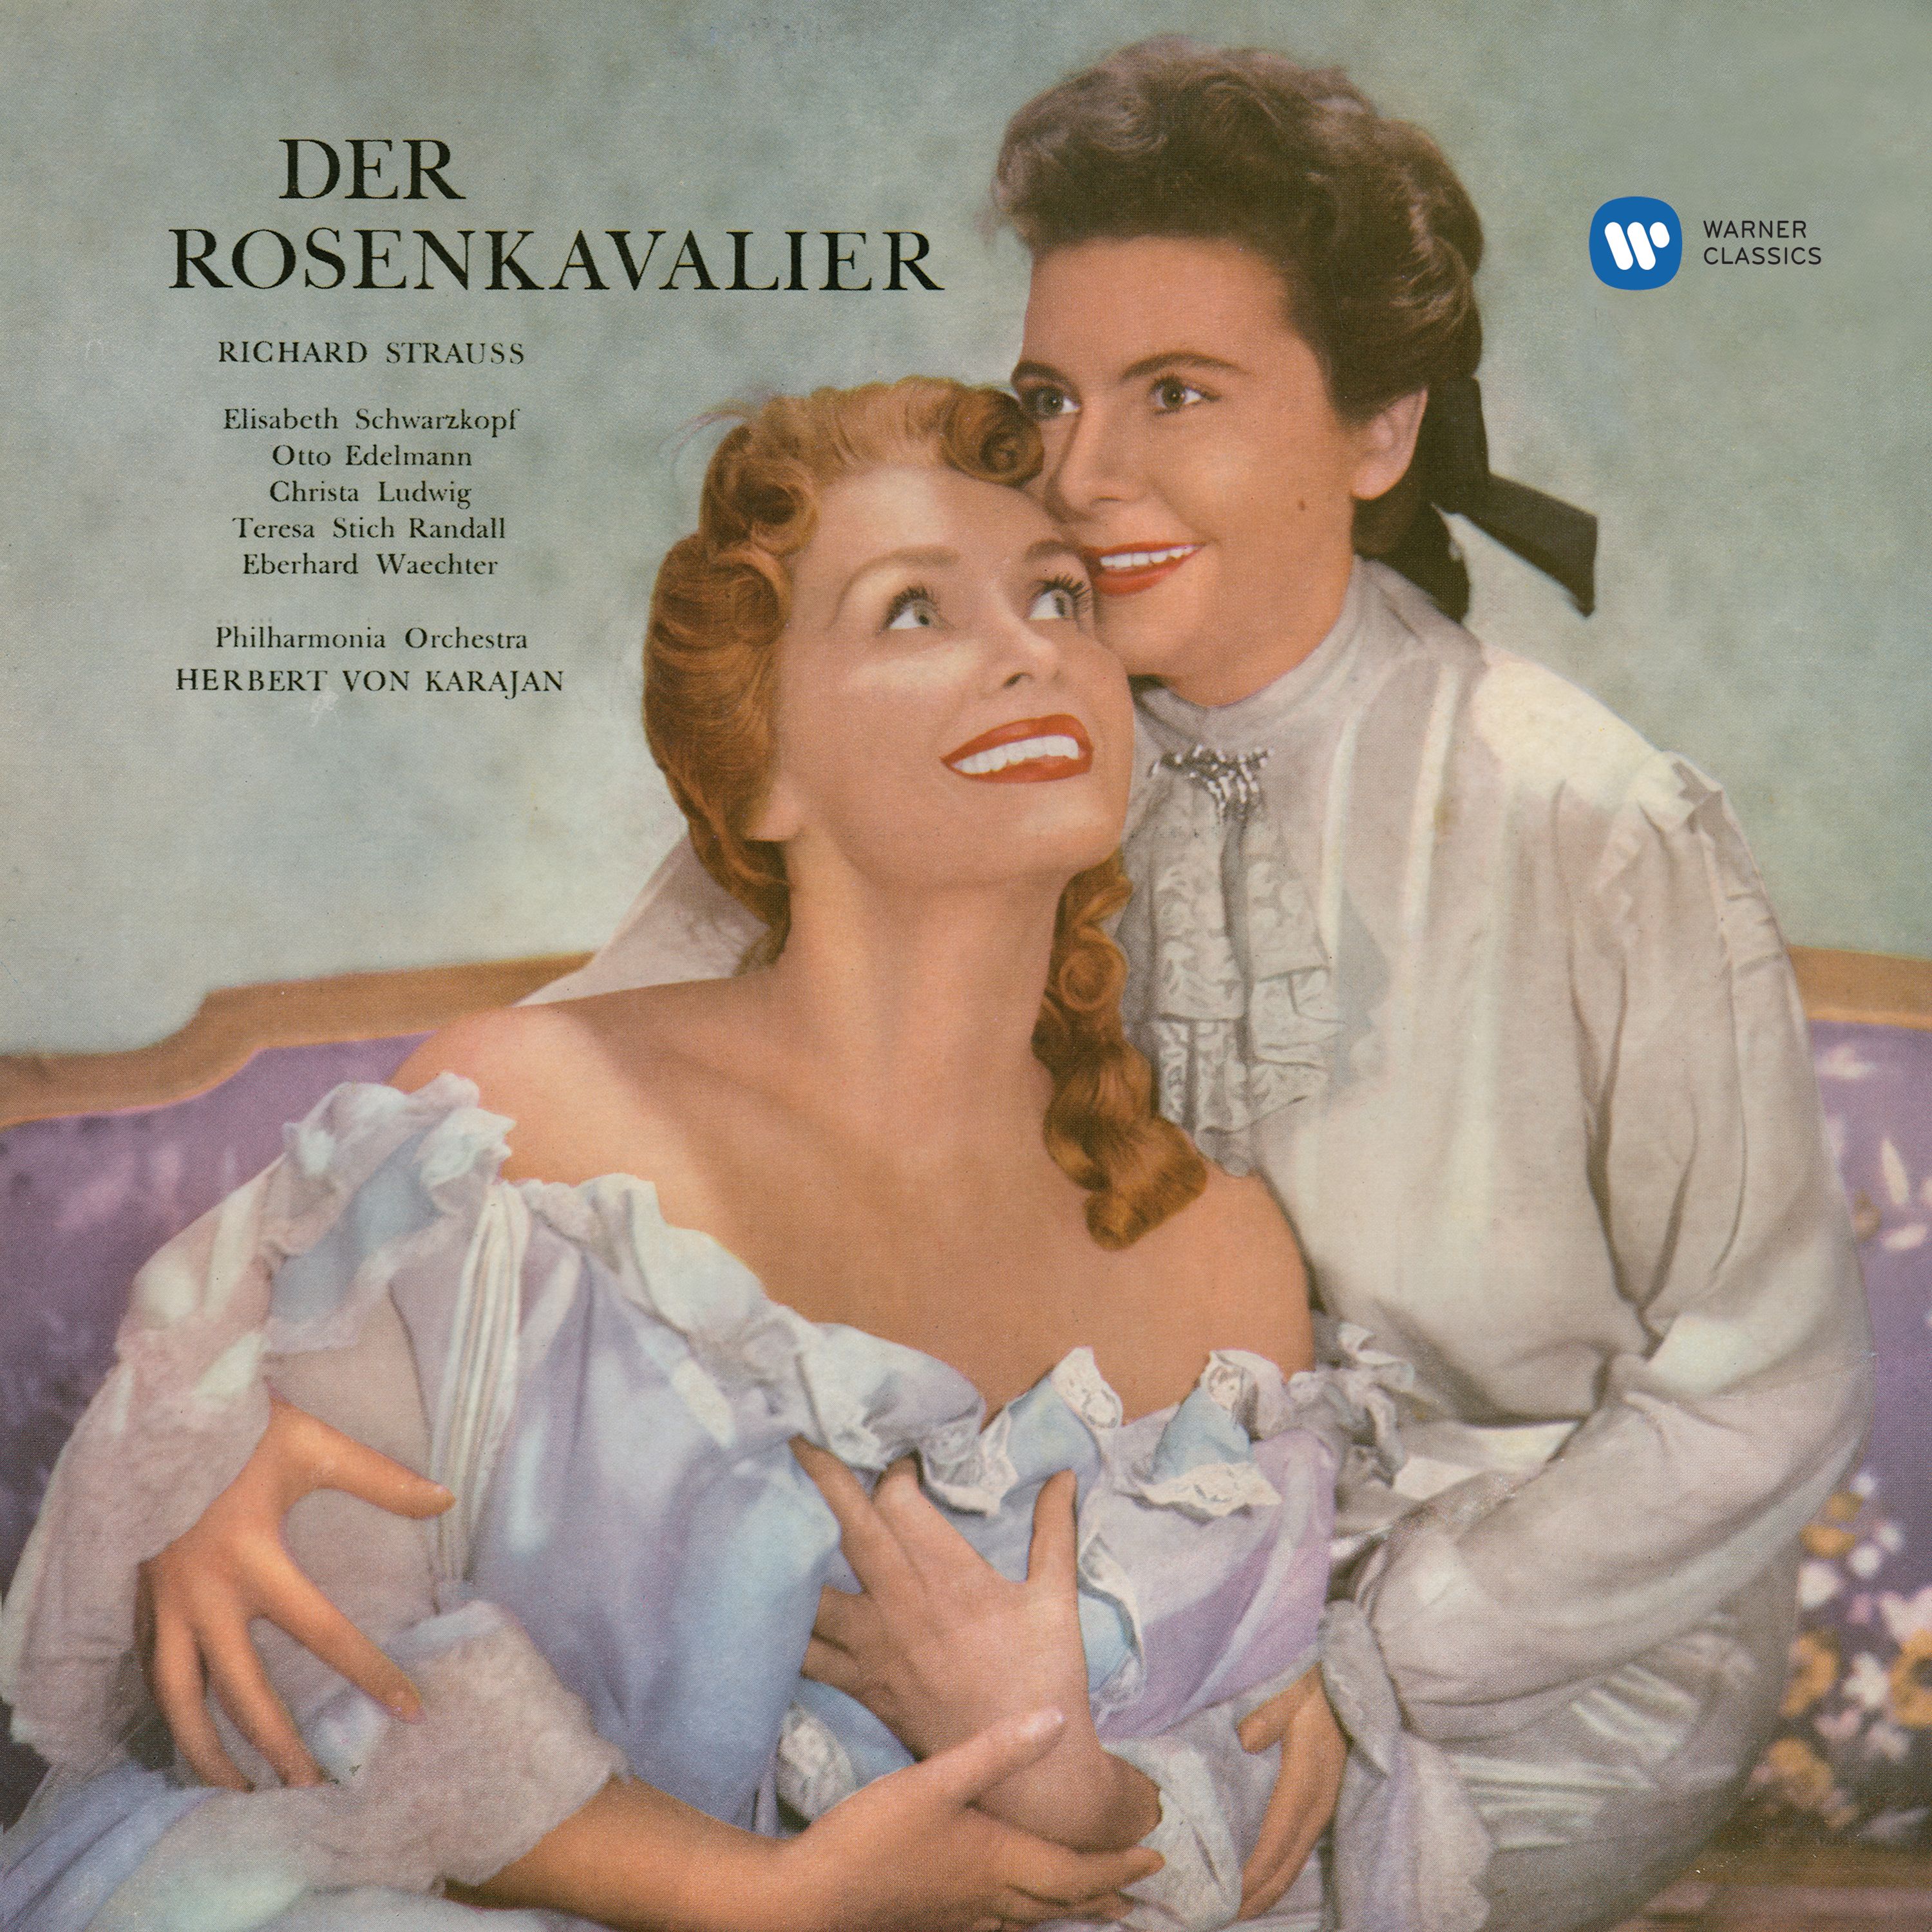 Der Rosenkavalier, Op. 59, Act 1: "I komm' glei '... Drei arme, adelige Waisen" (Octavian, Orphans, Milliner, Animal-seller, Marschallin, Valzacchi)